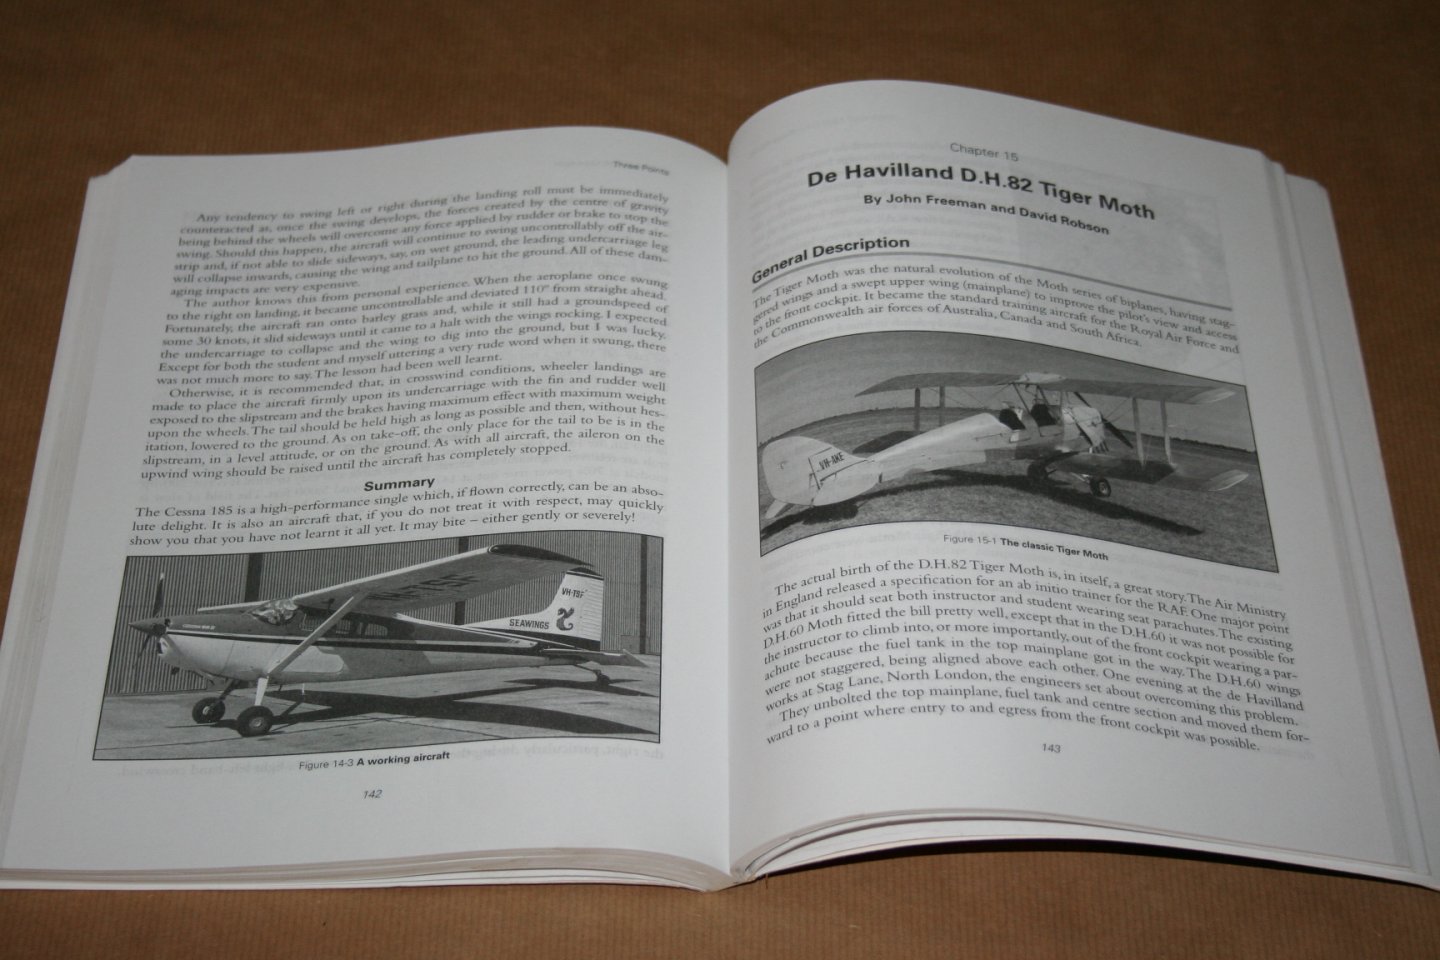 David Robson - Three points -- Flying a Tailwheel Aircraft